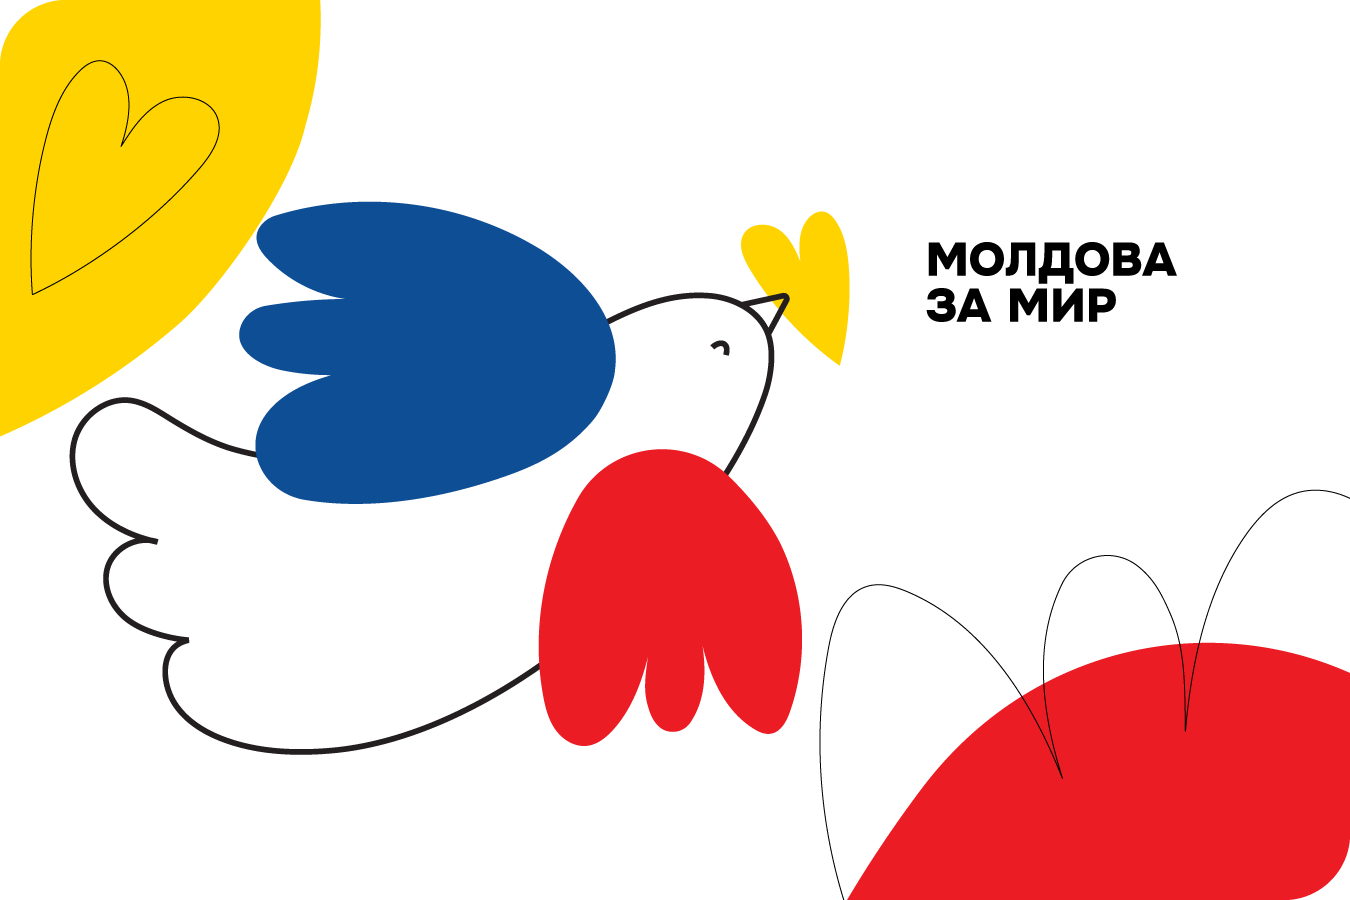 Pentru moldova. Молдова за мир. Moldova for Peace. Рисунок Молдова за мир.